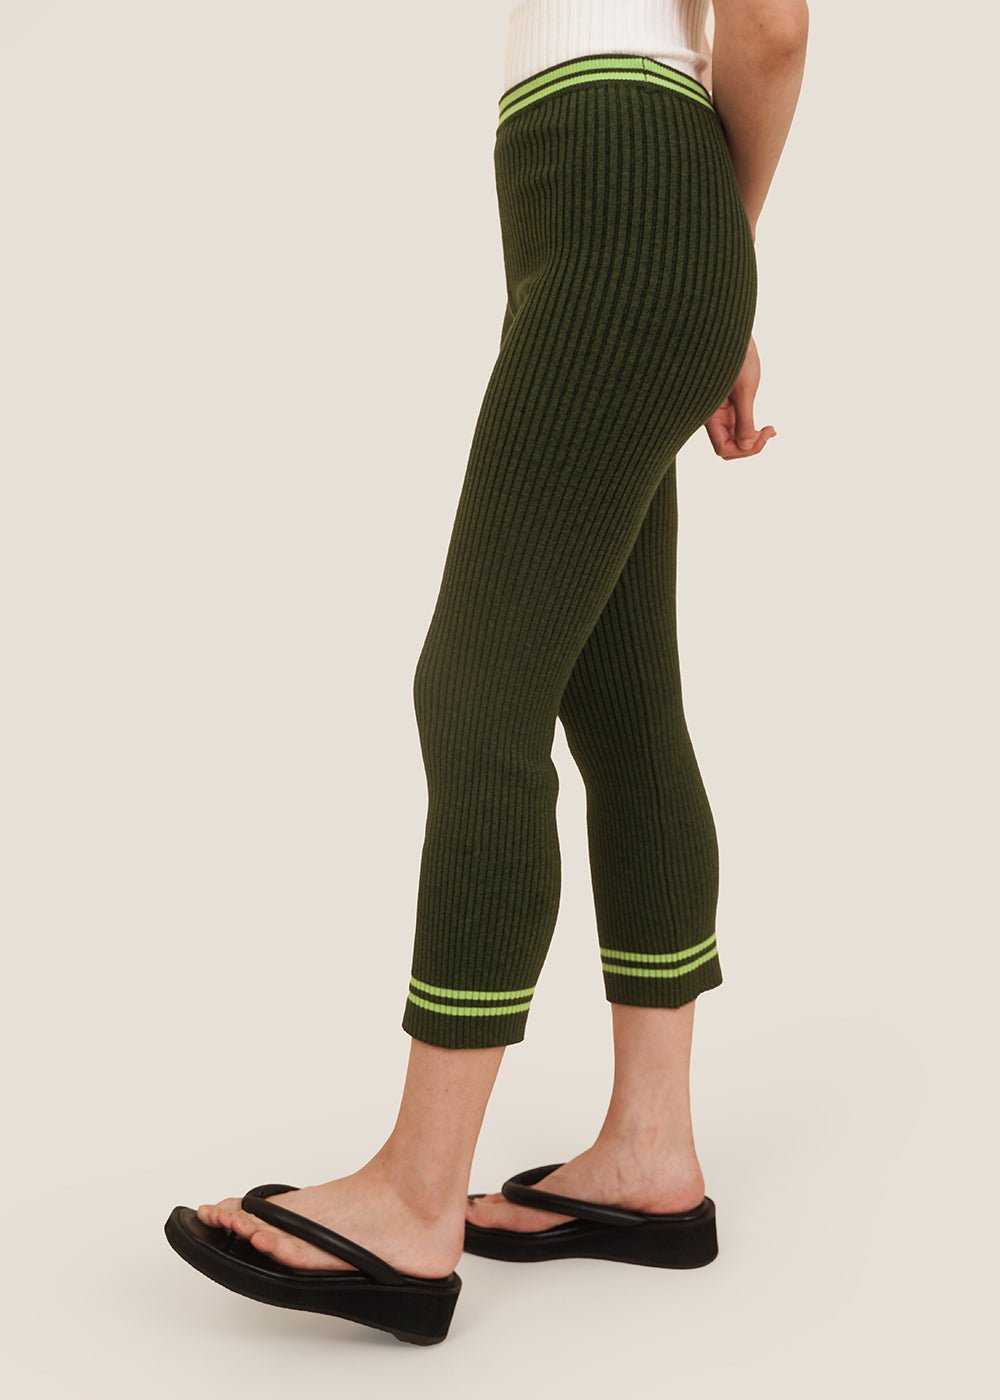 Giu Giu Flora Blur NONNA Track Suit Pant - New Classics Studios Sustainable Ethical Fashion Canada